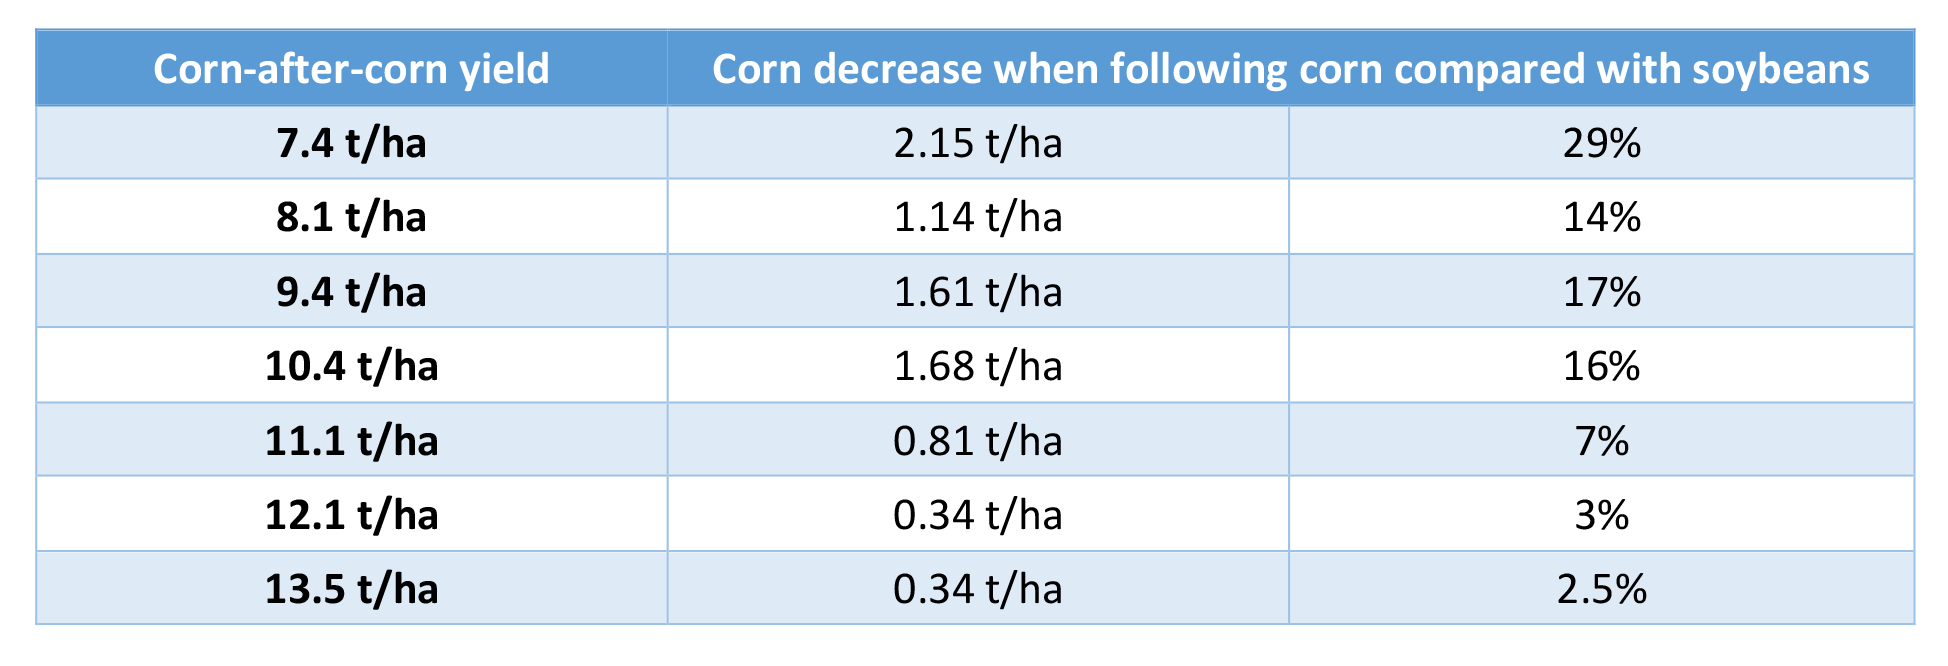 corn-after-corn-tbl-1.png